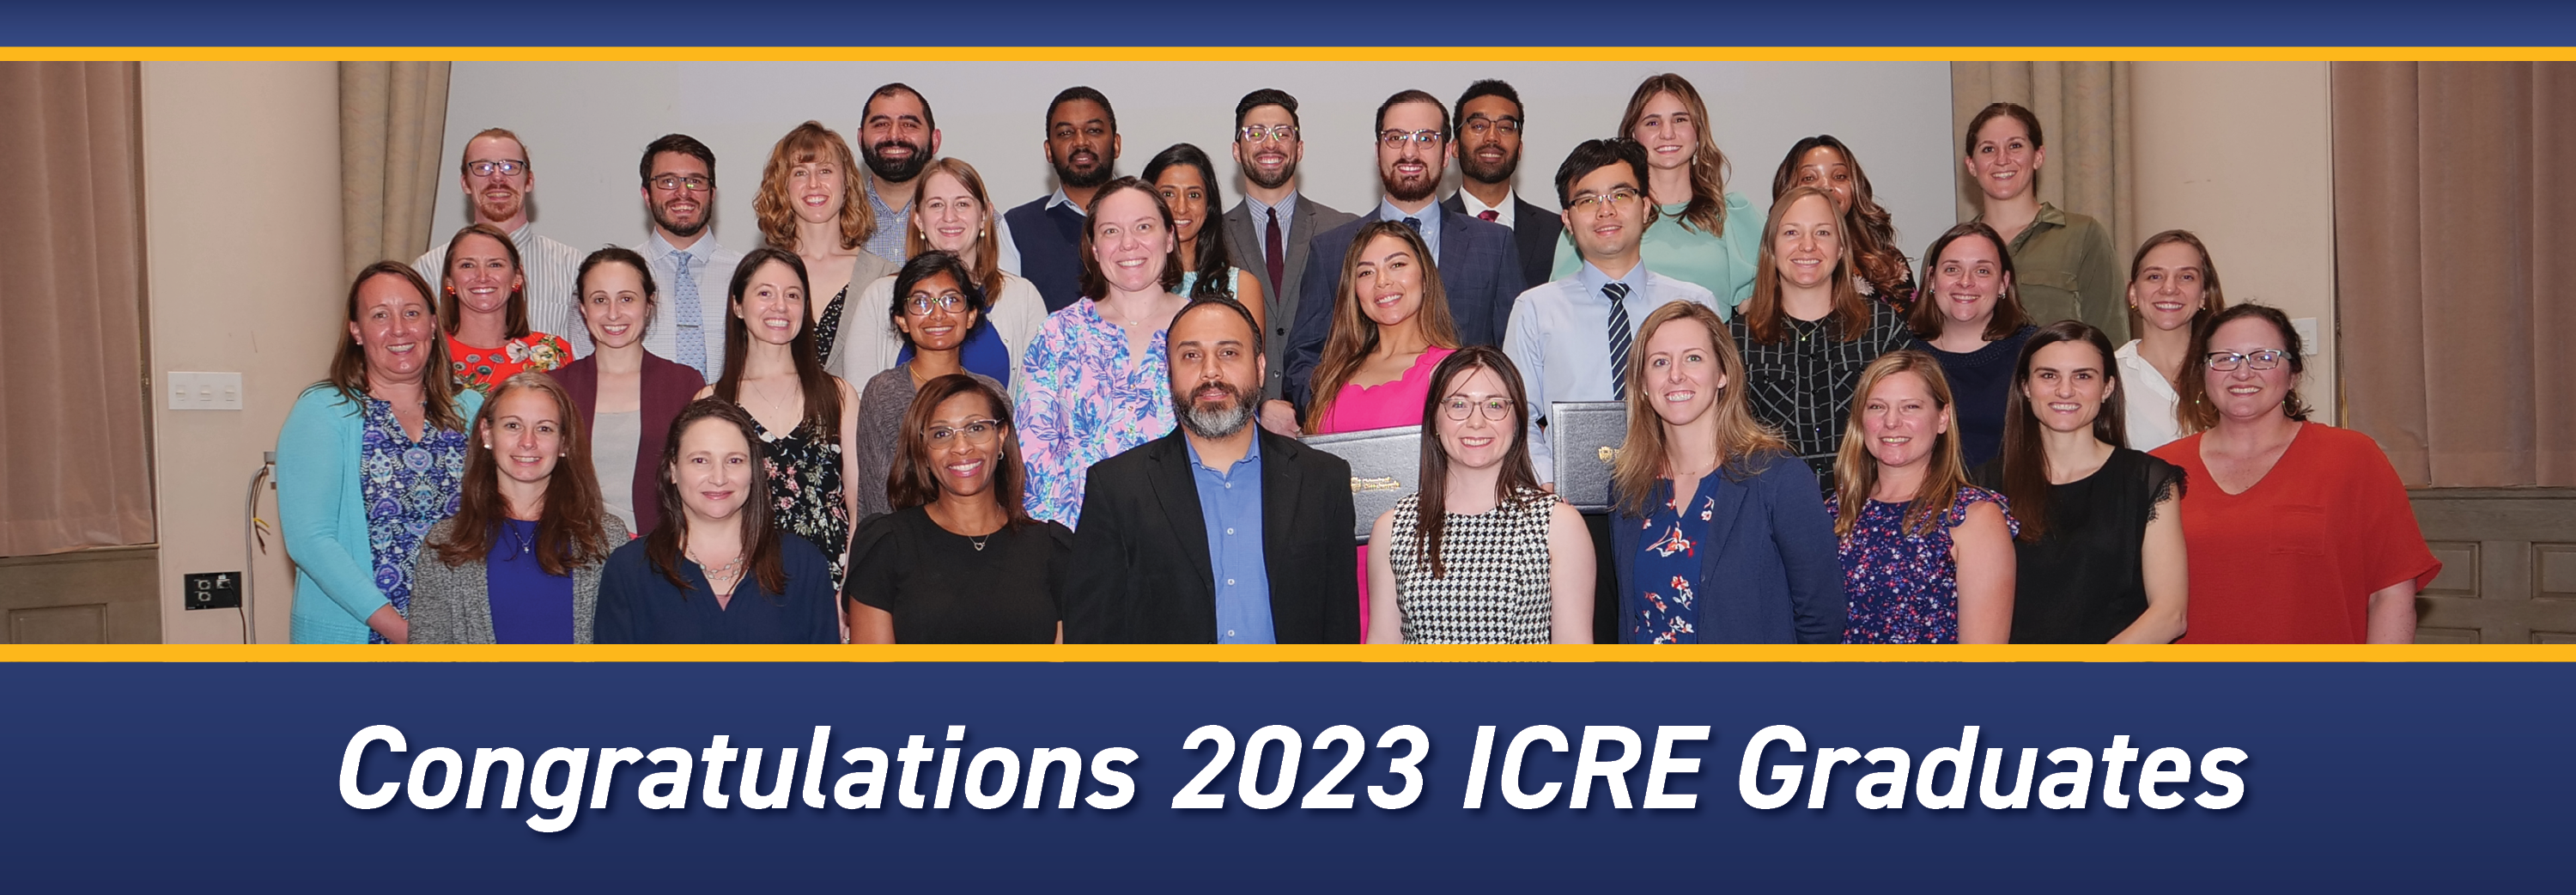 Congratulations 2023 ICRE Graduates